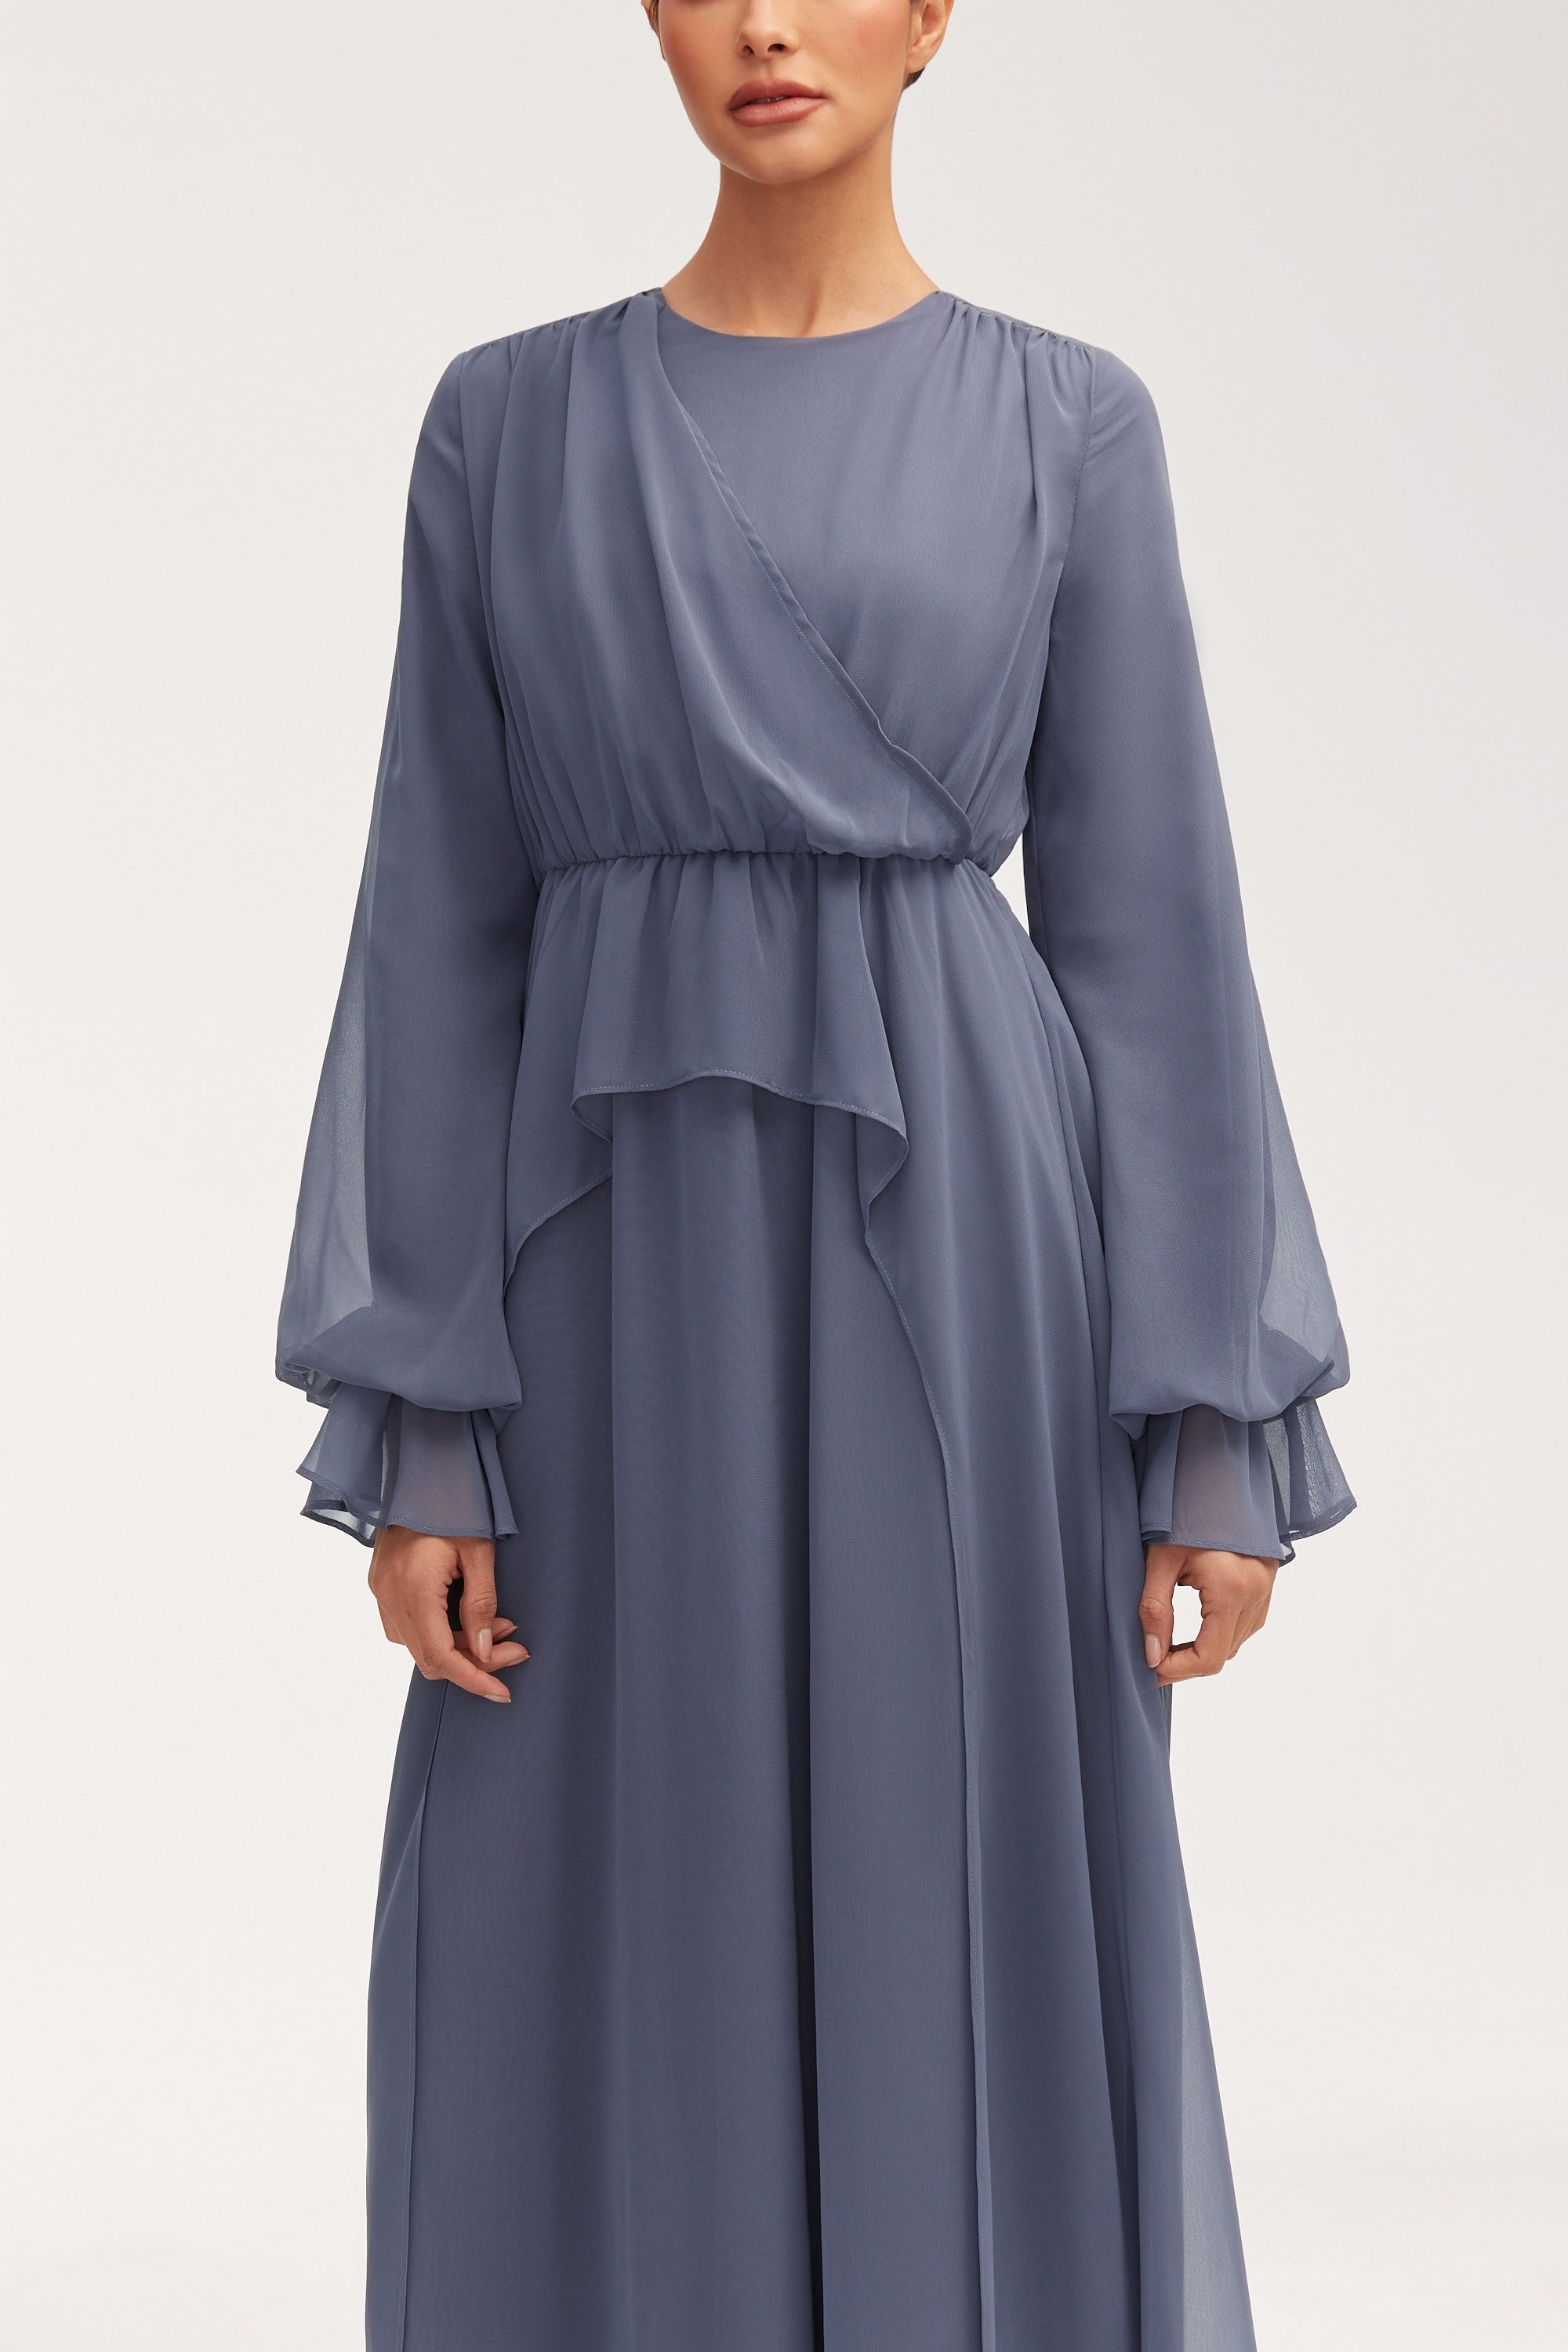 Aara Chiffon Maxi Dress - Dusk Clothing Veiled 